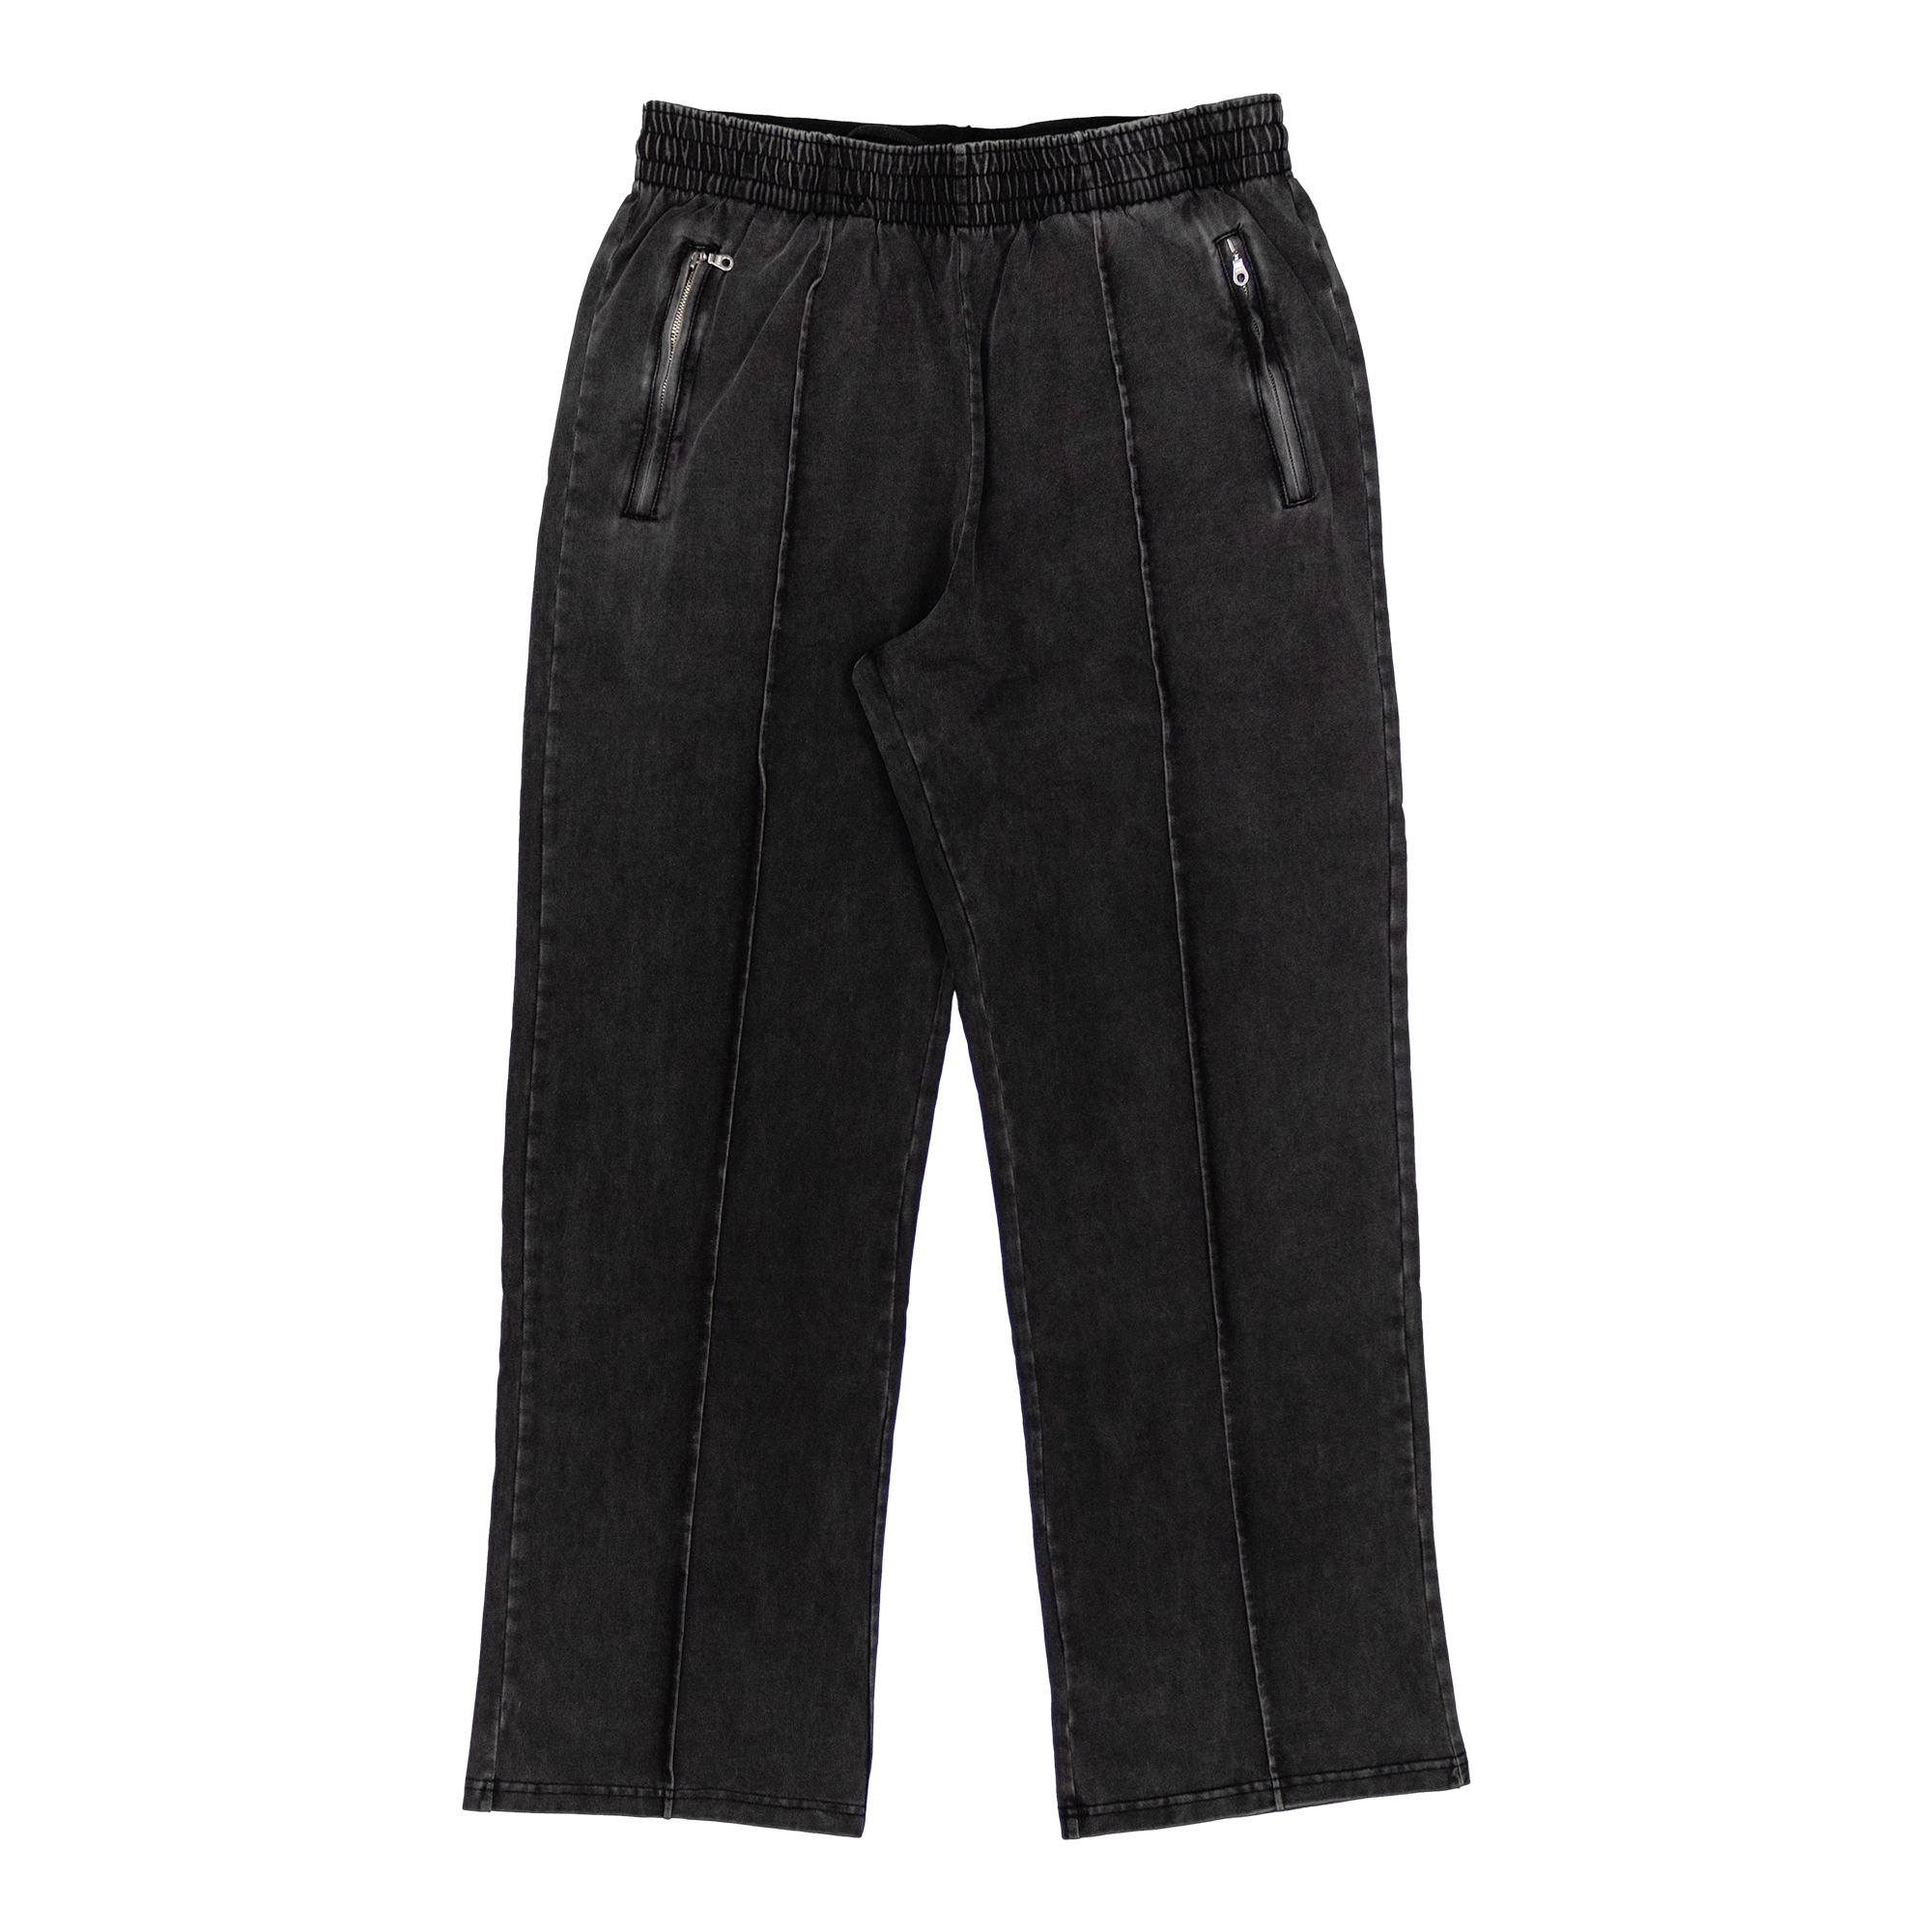 PLZ Hi-Viz Pleated Pants (Pre-Order)